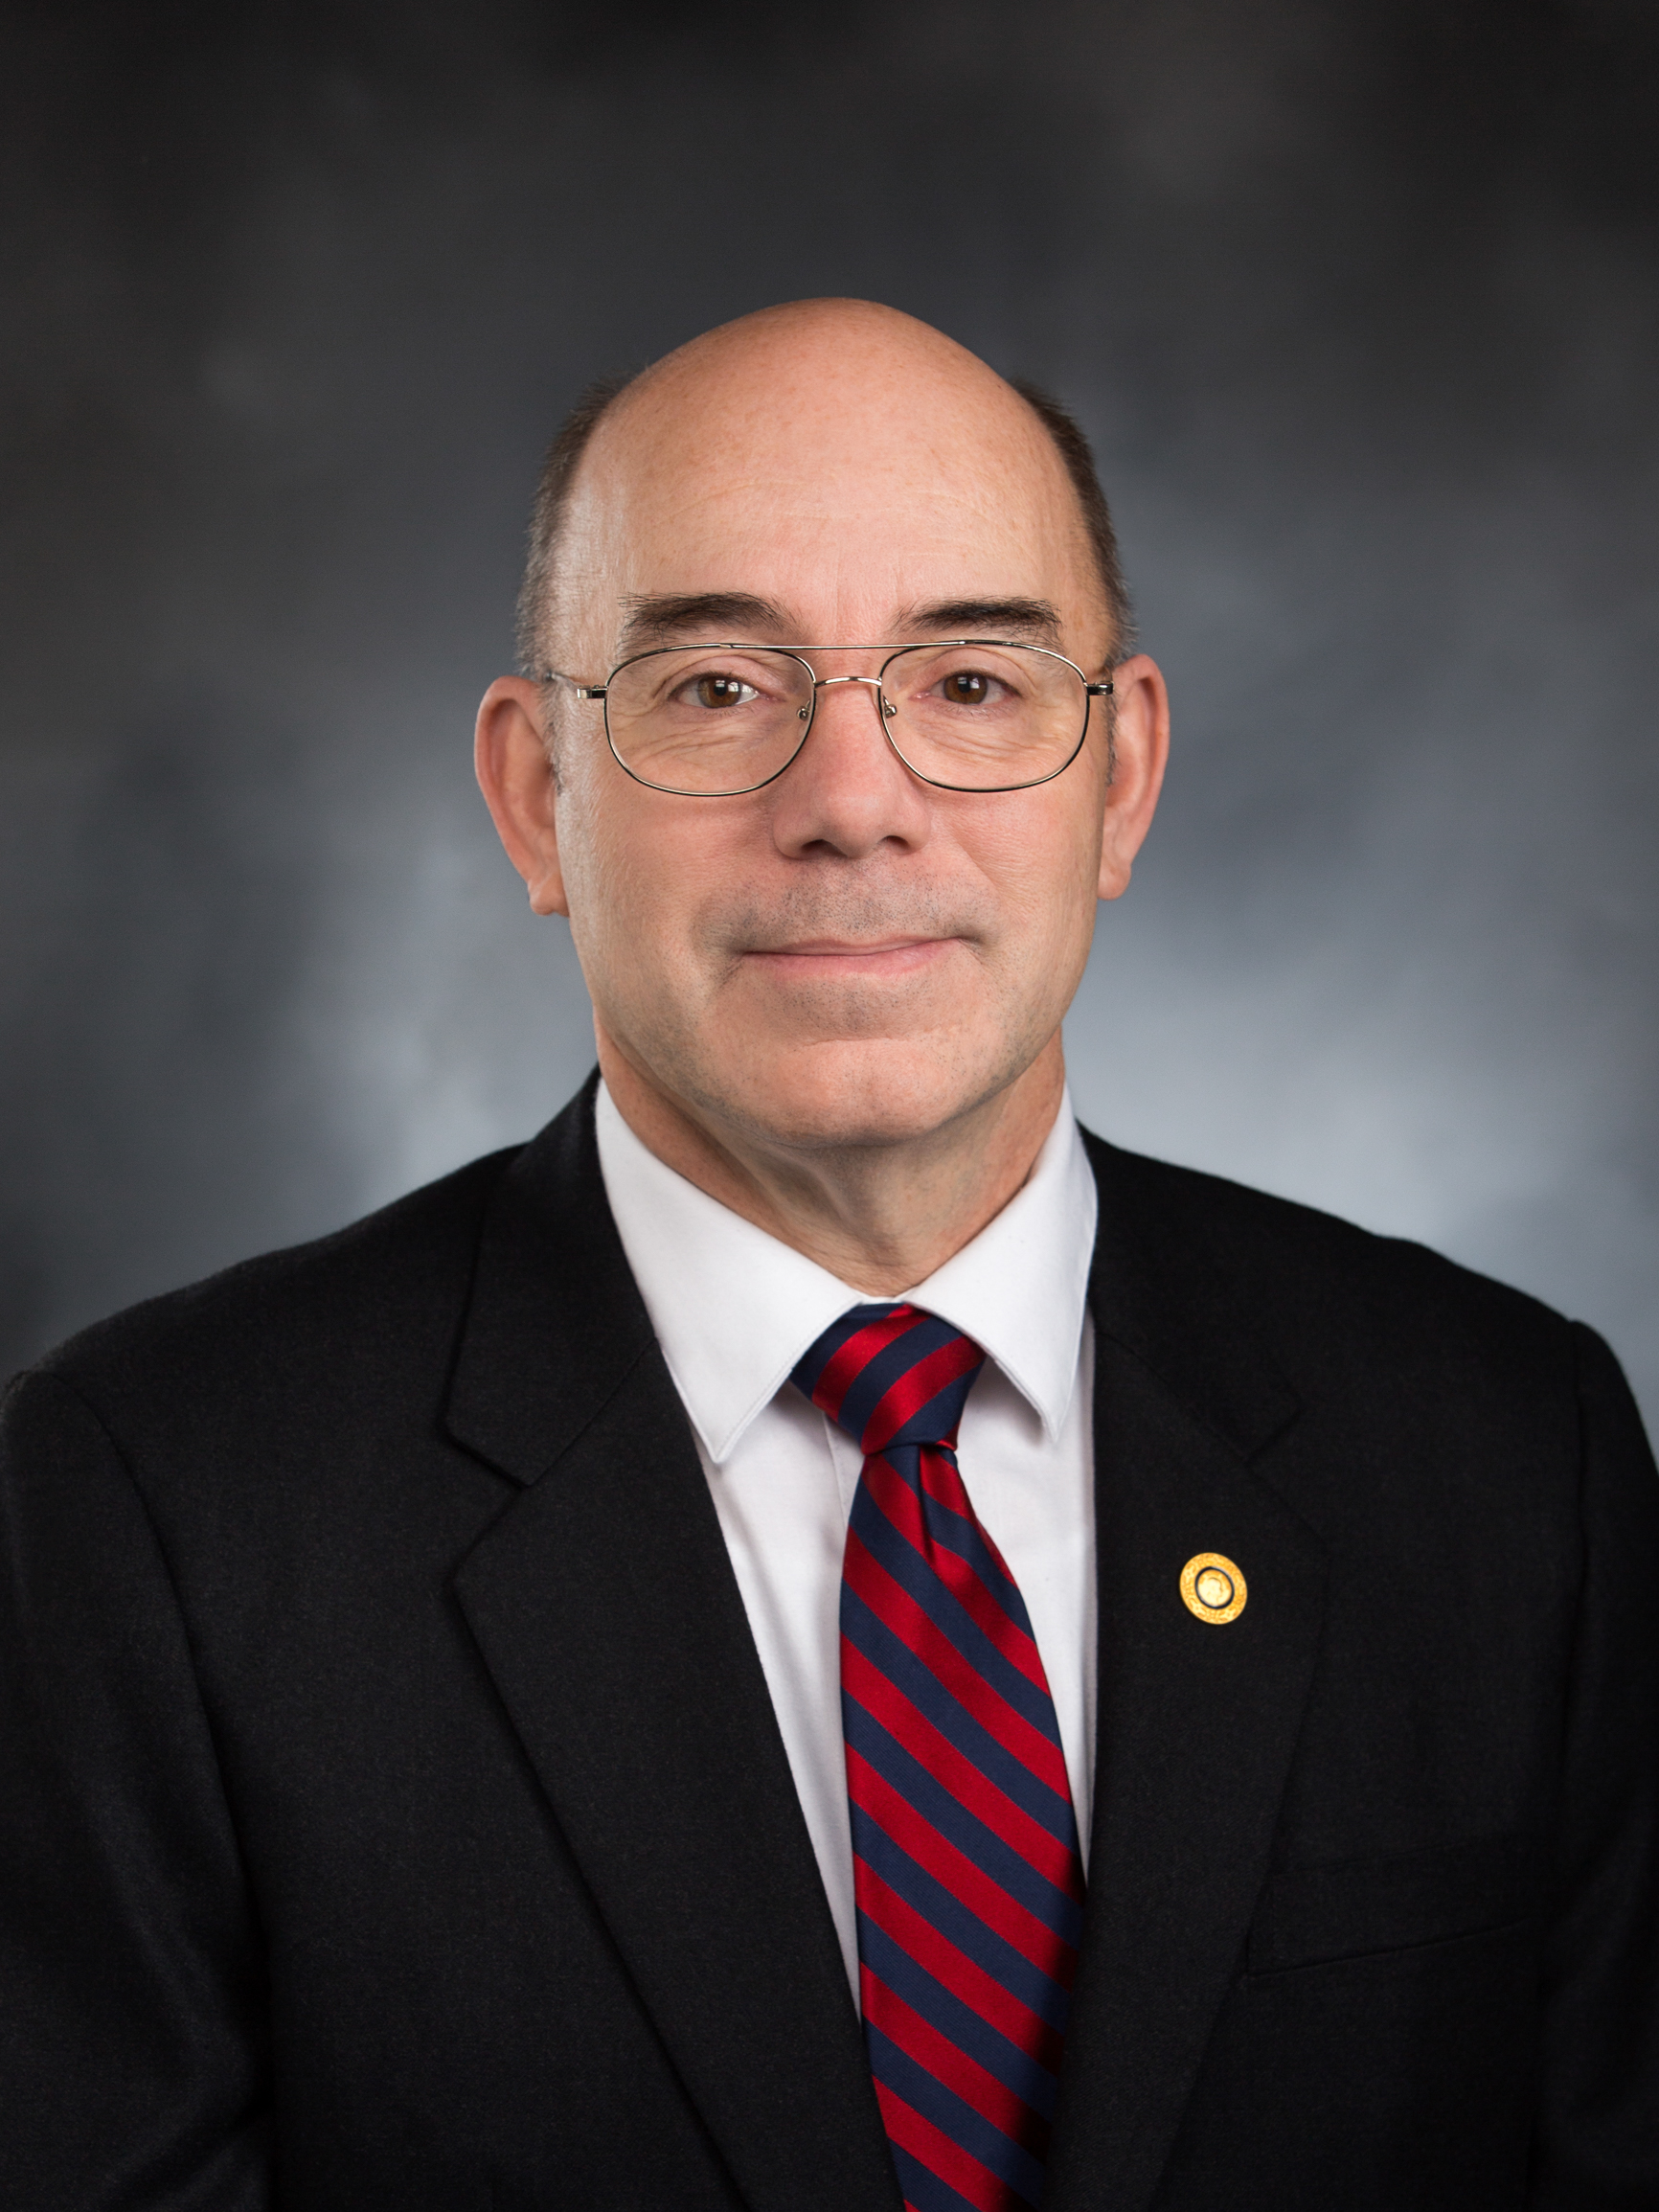 Senator Keith Wagoner